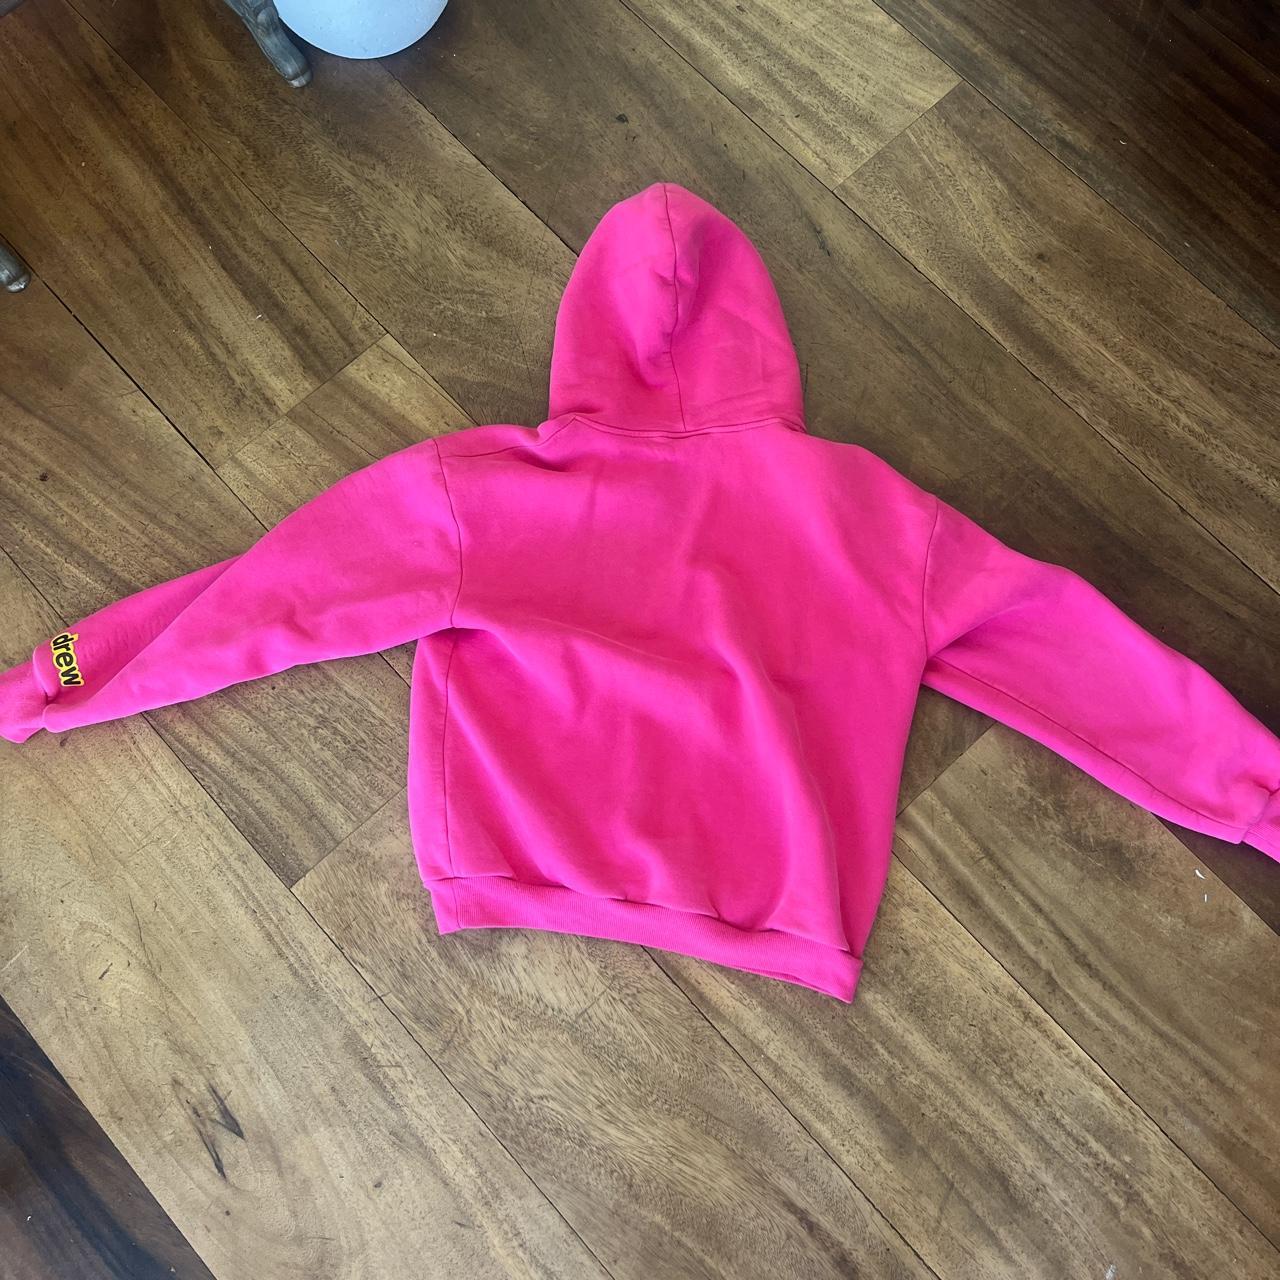 drew house mascot hoodie in hot pink size medium.